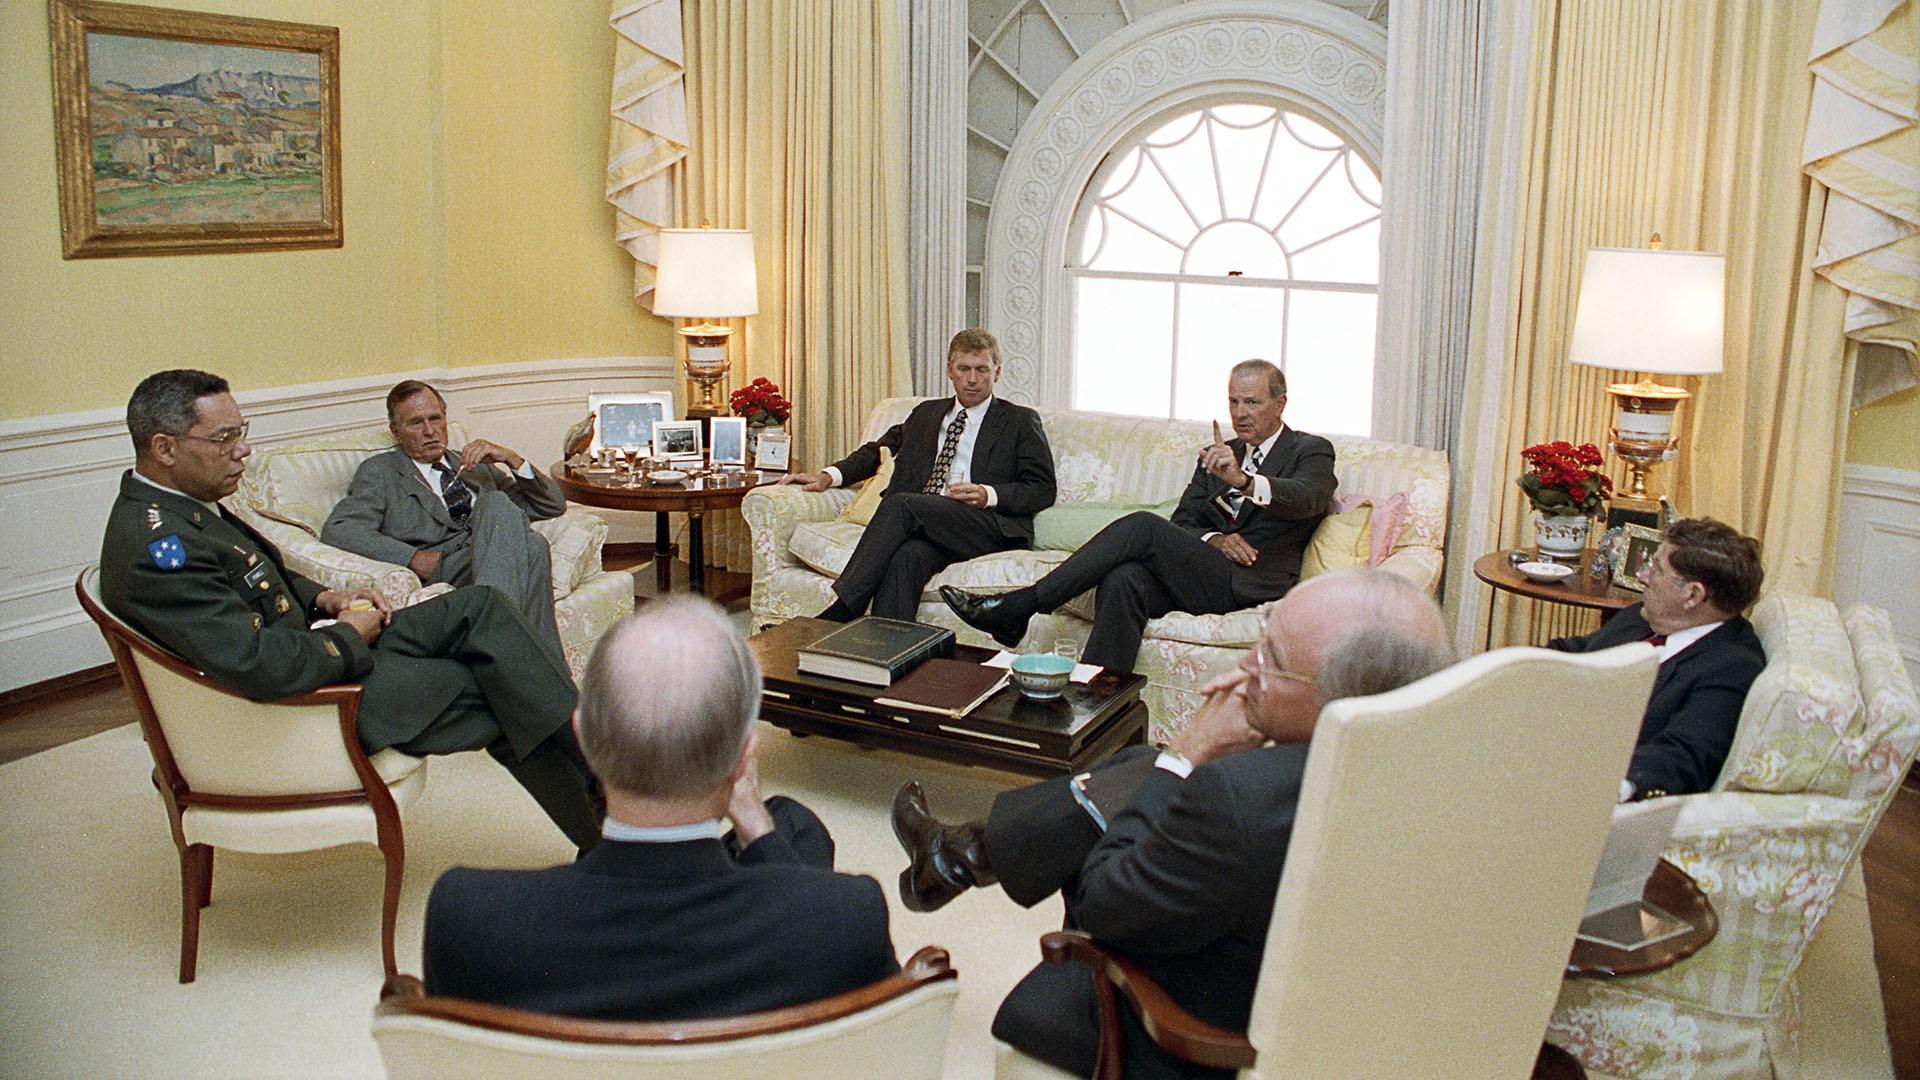 President George H.W. Bush and his advisors.